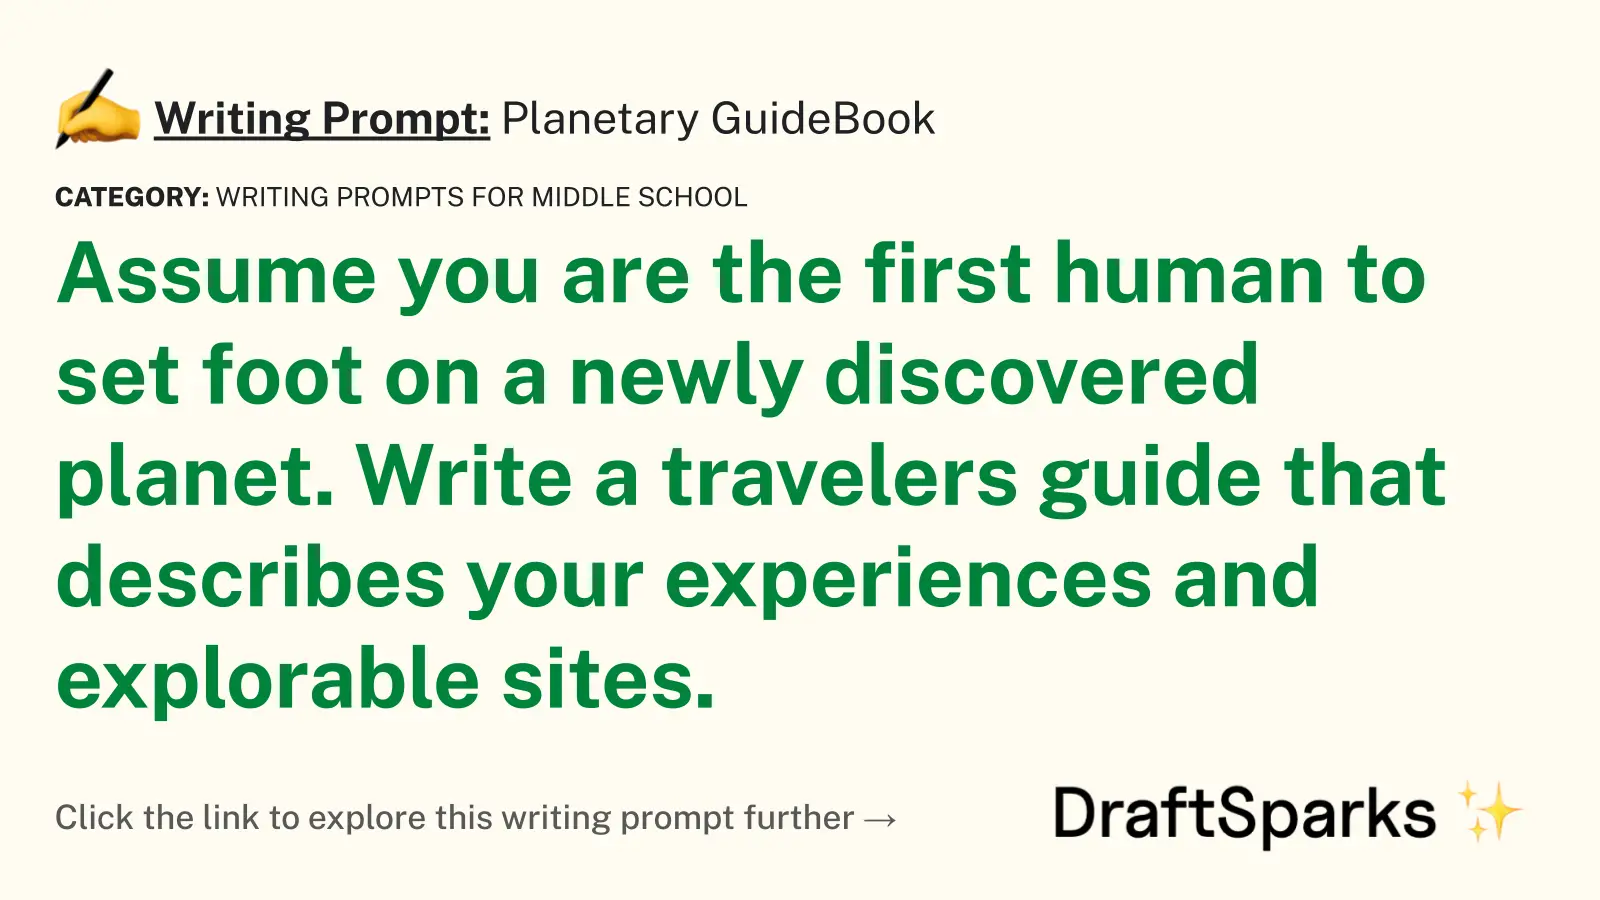 Planetary GuideBook